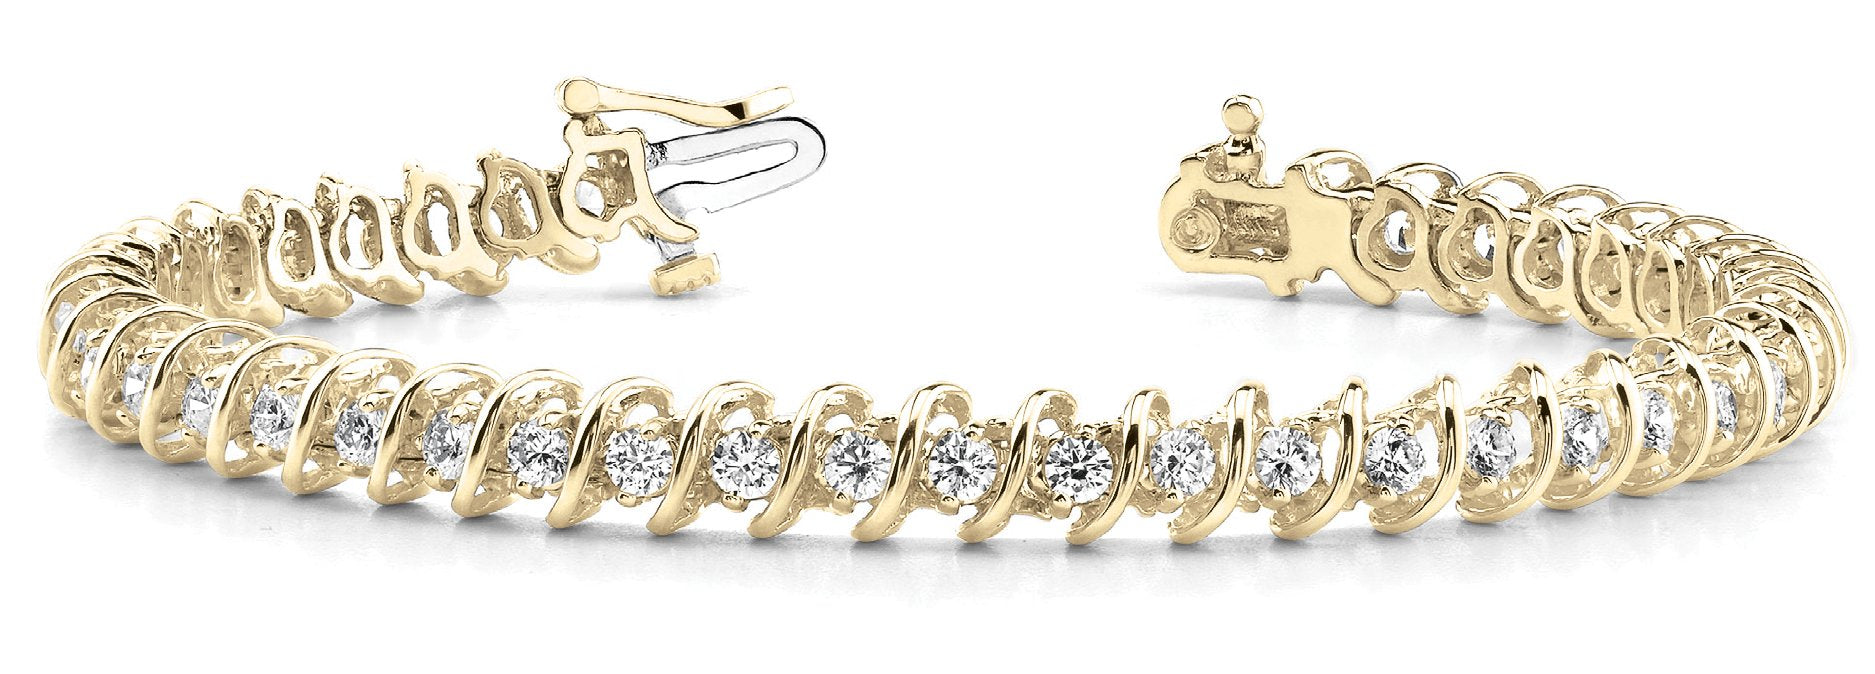 Fancy Diamond Bracelet Ladies 9.02ct tw - 14kt Yellow Gold